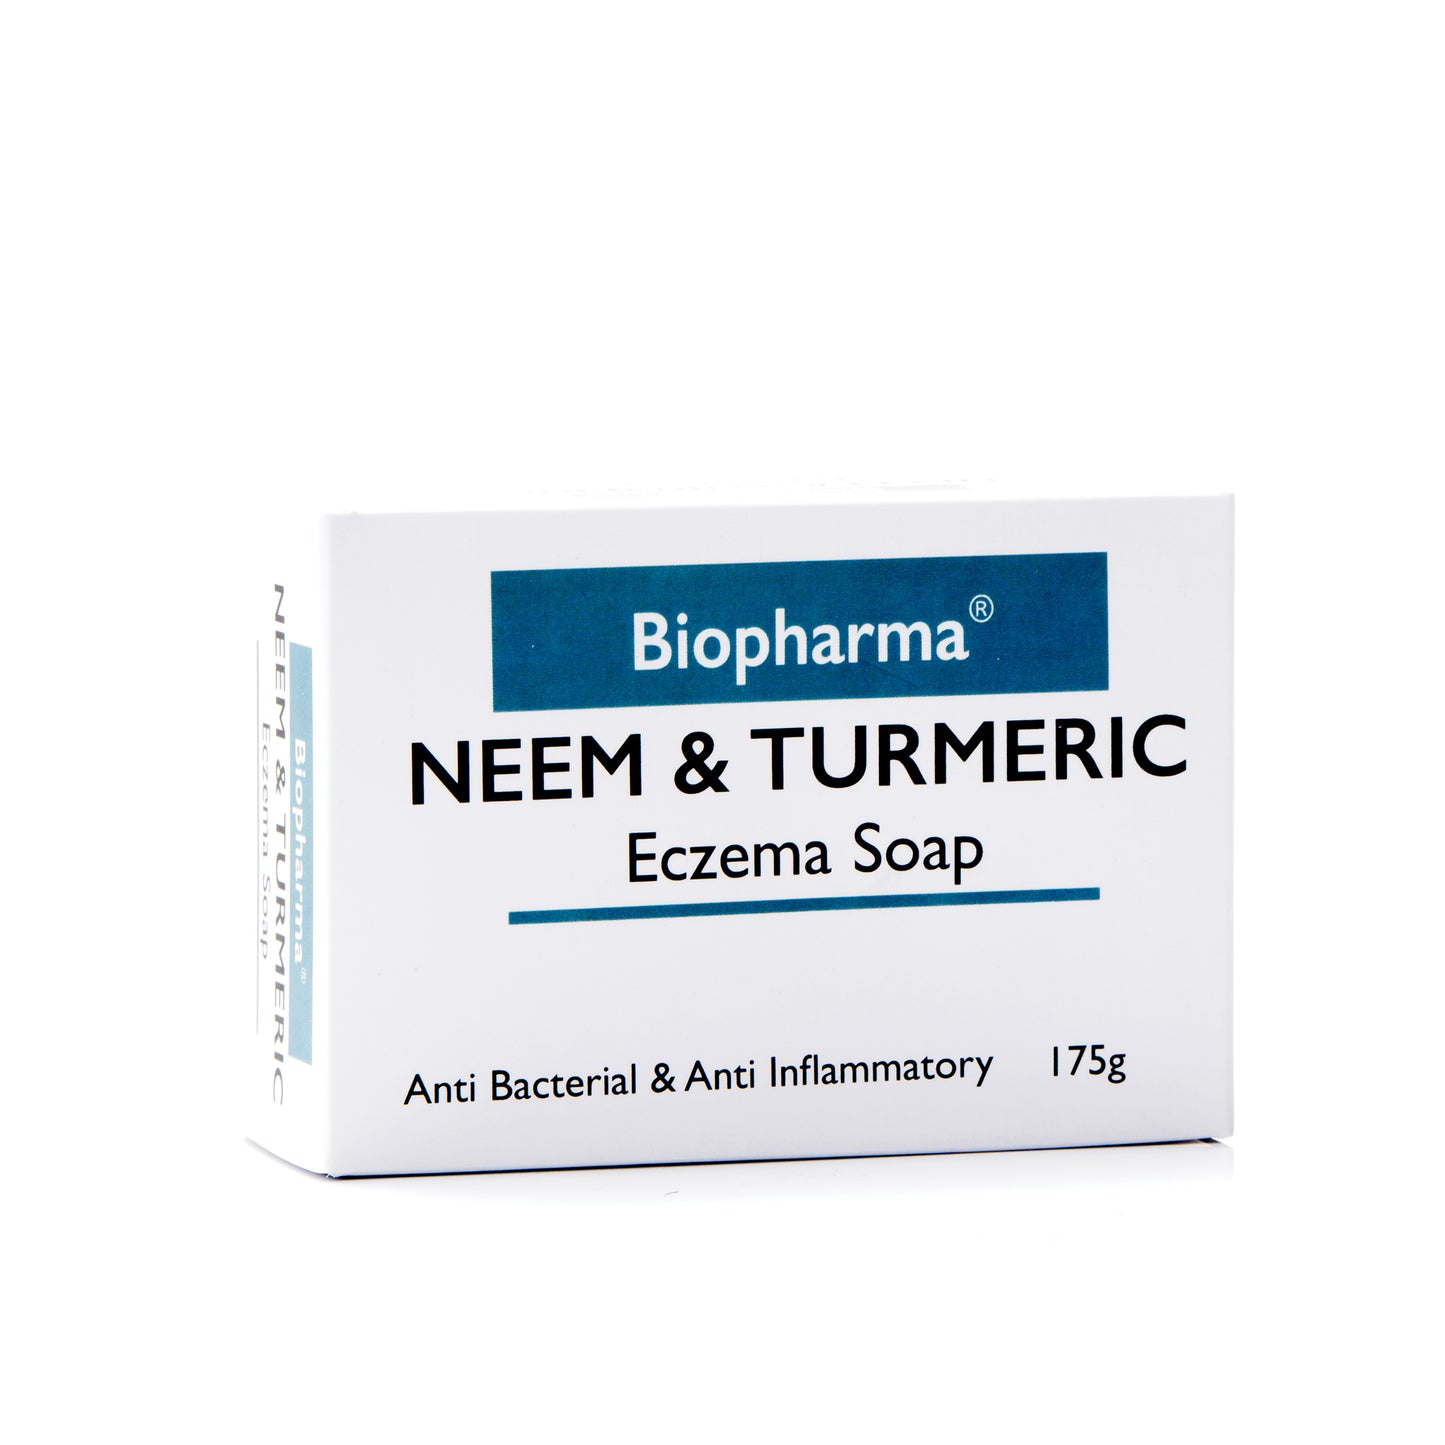 Biopharma Neem & Turmeric Eczema Soap - 175g